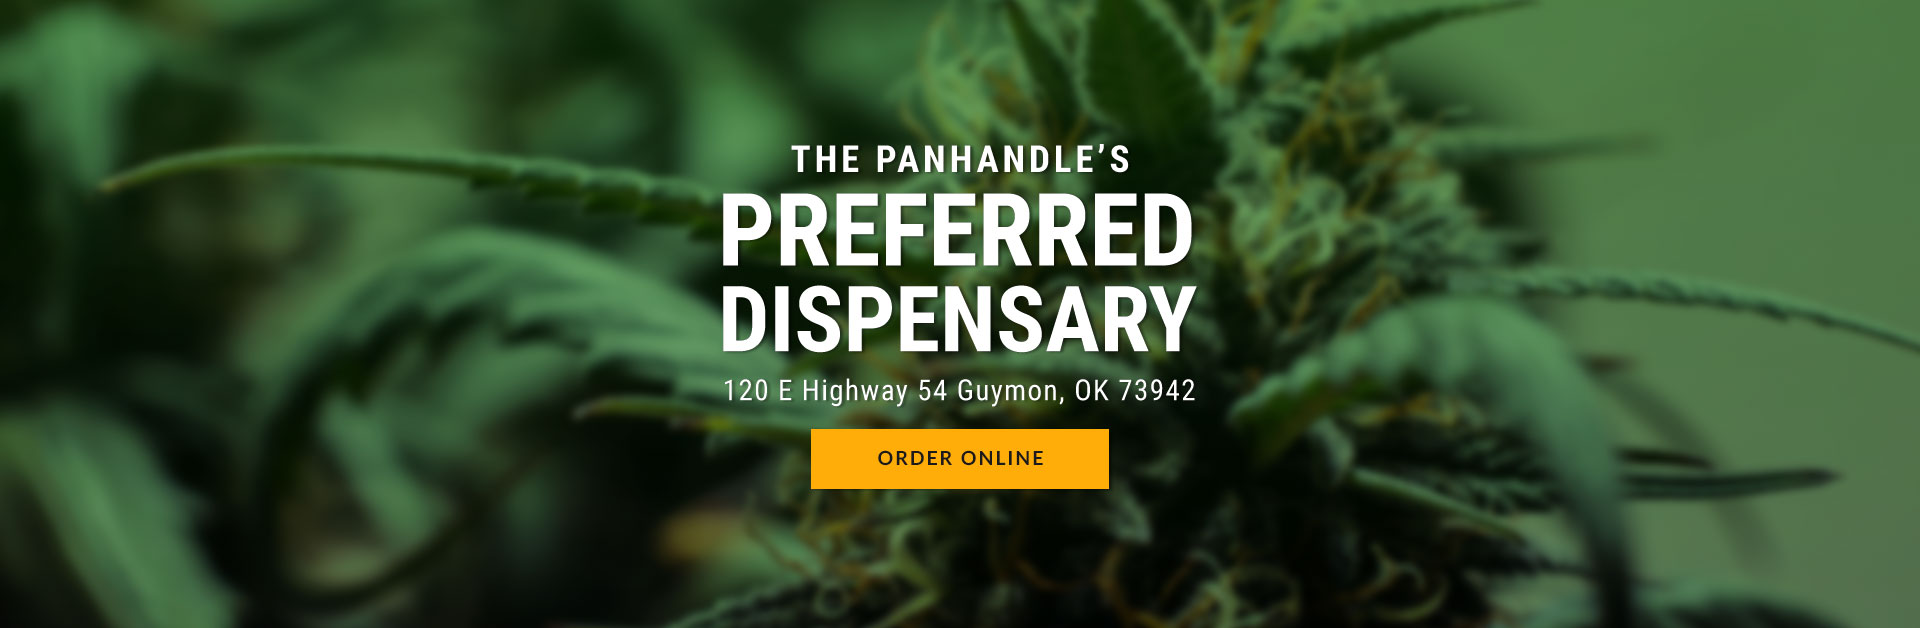 The Panhandle’s Preferred Dispensary